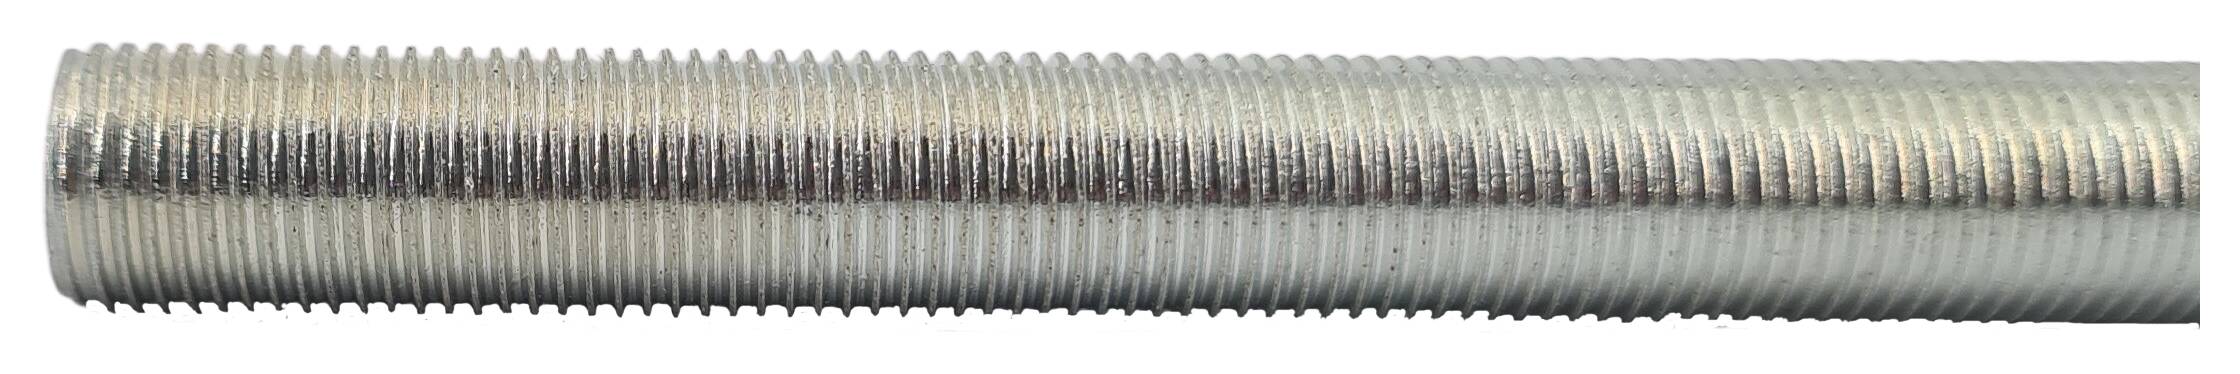 iron thread tube M10x1x225 round zinc